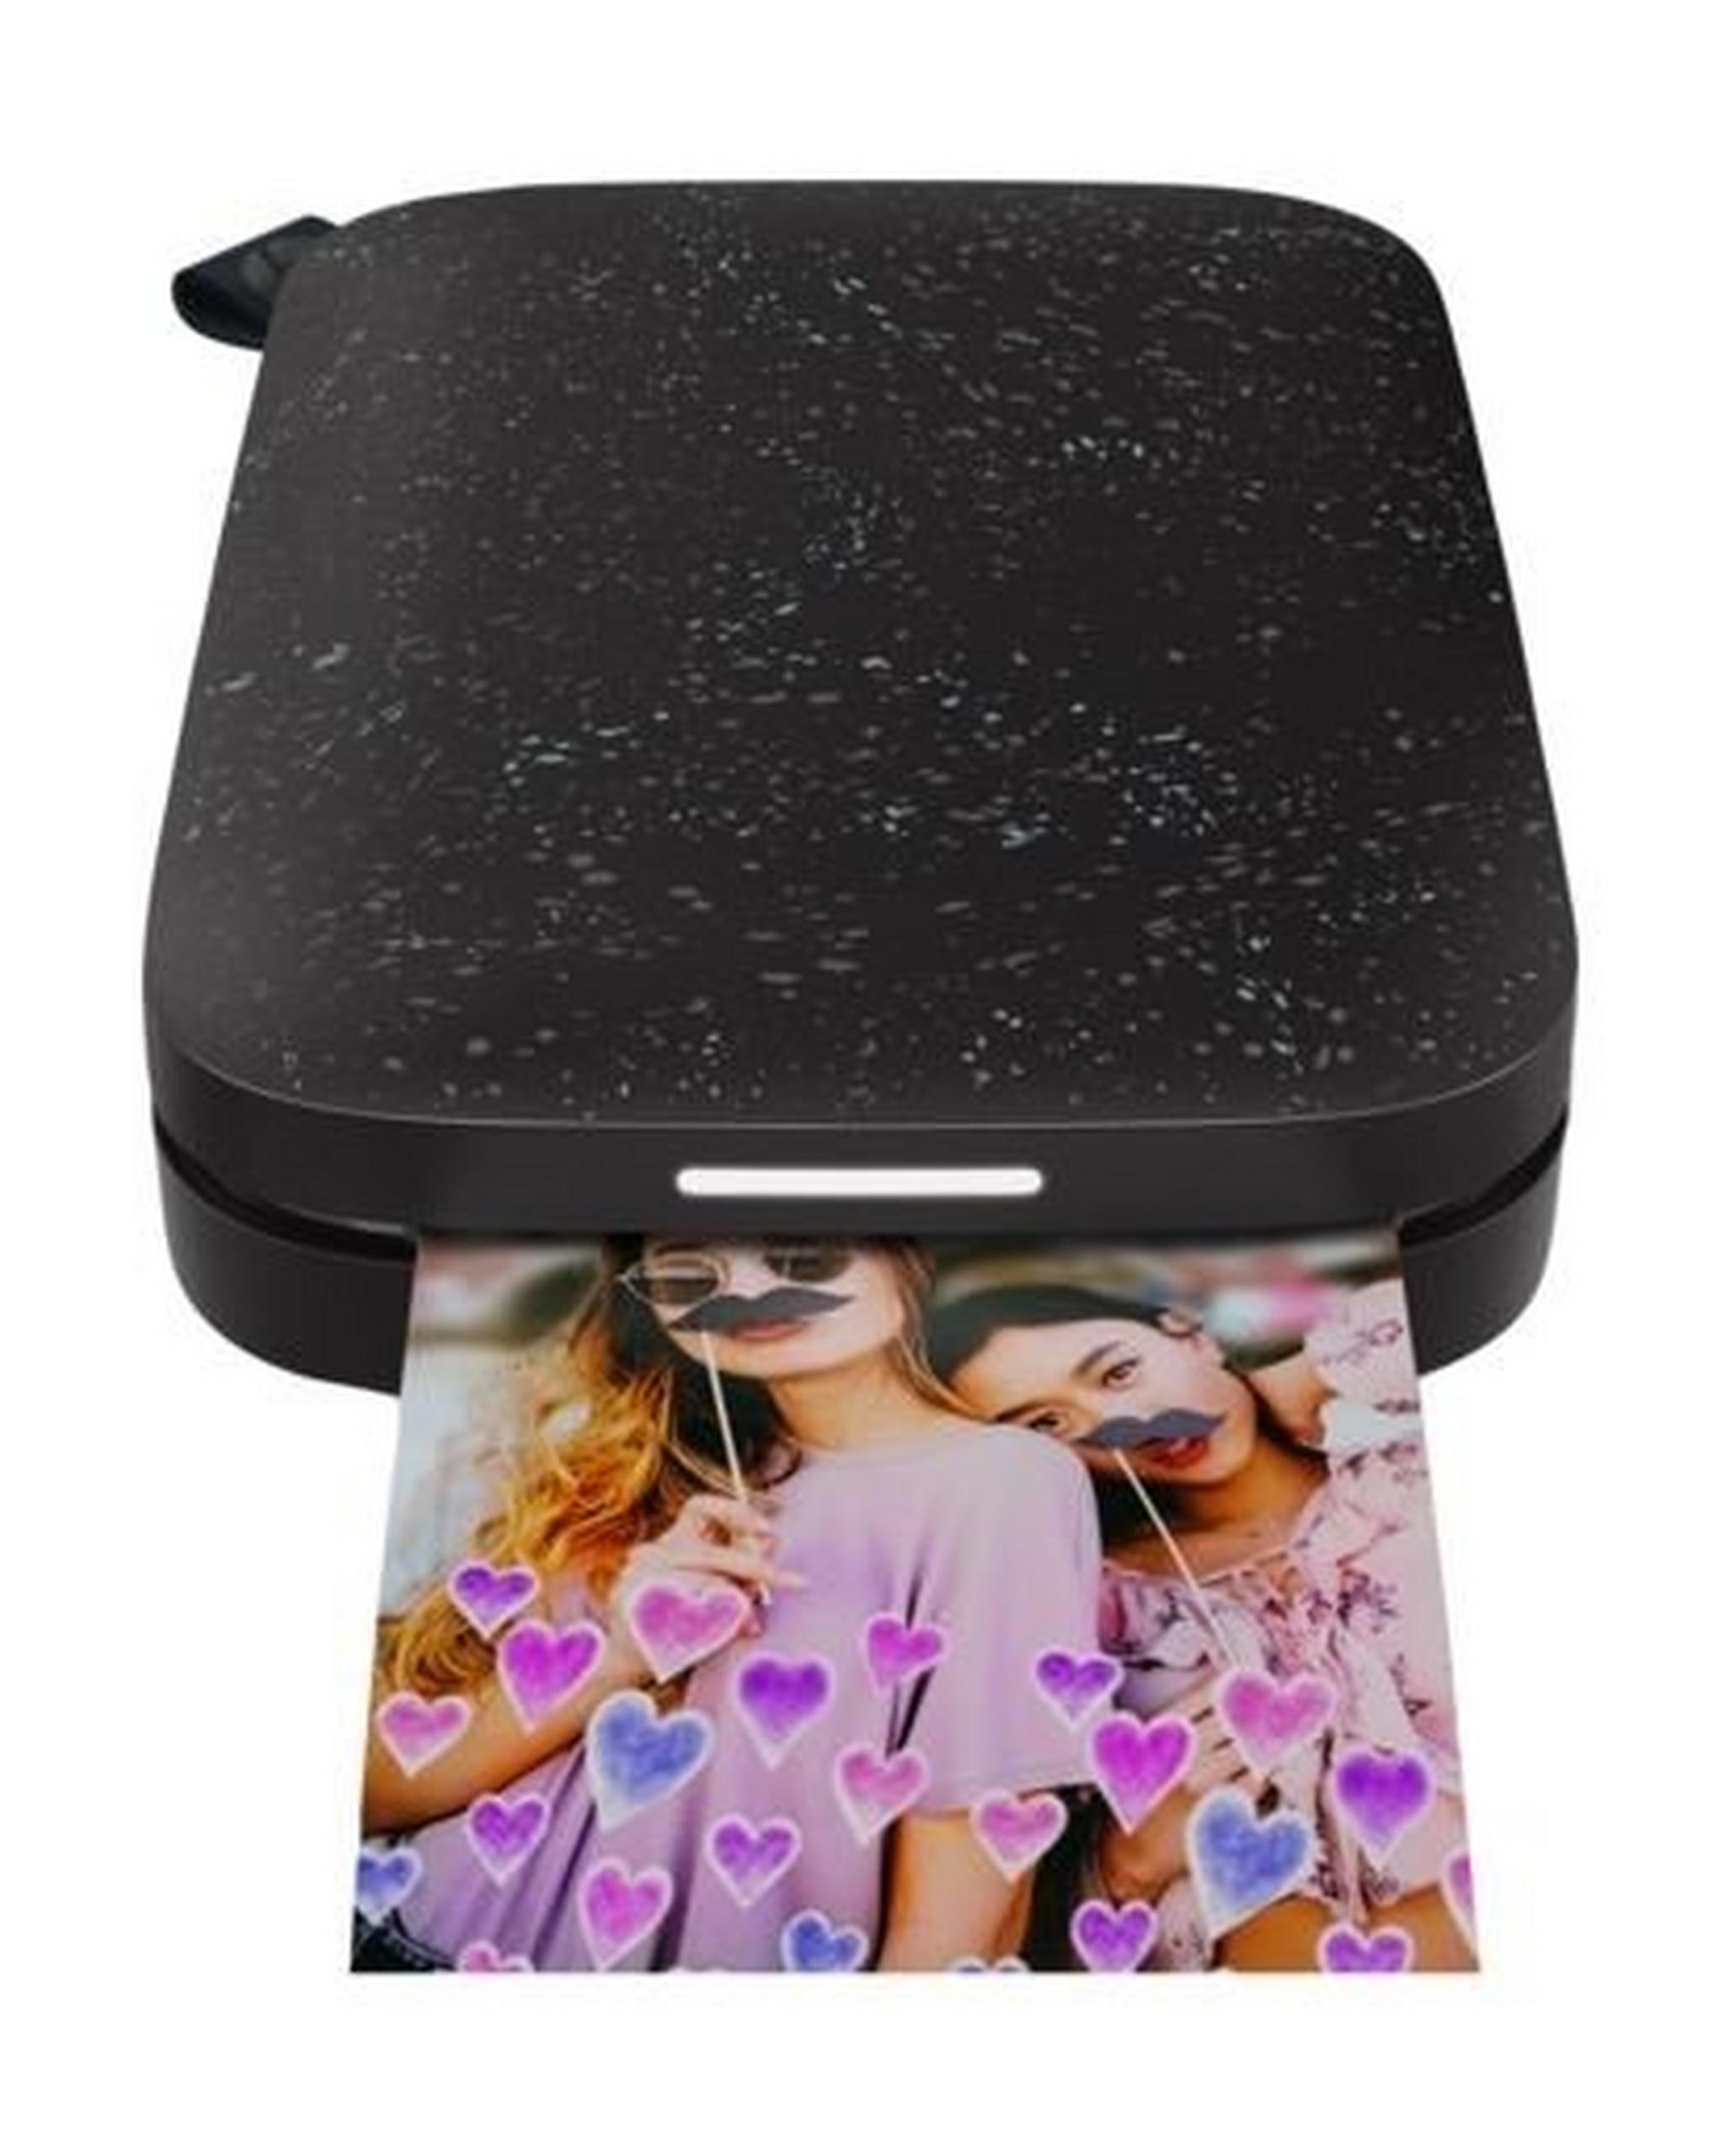 Luna Sprocket 2nd Edition Photo Printer - Black